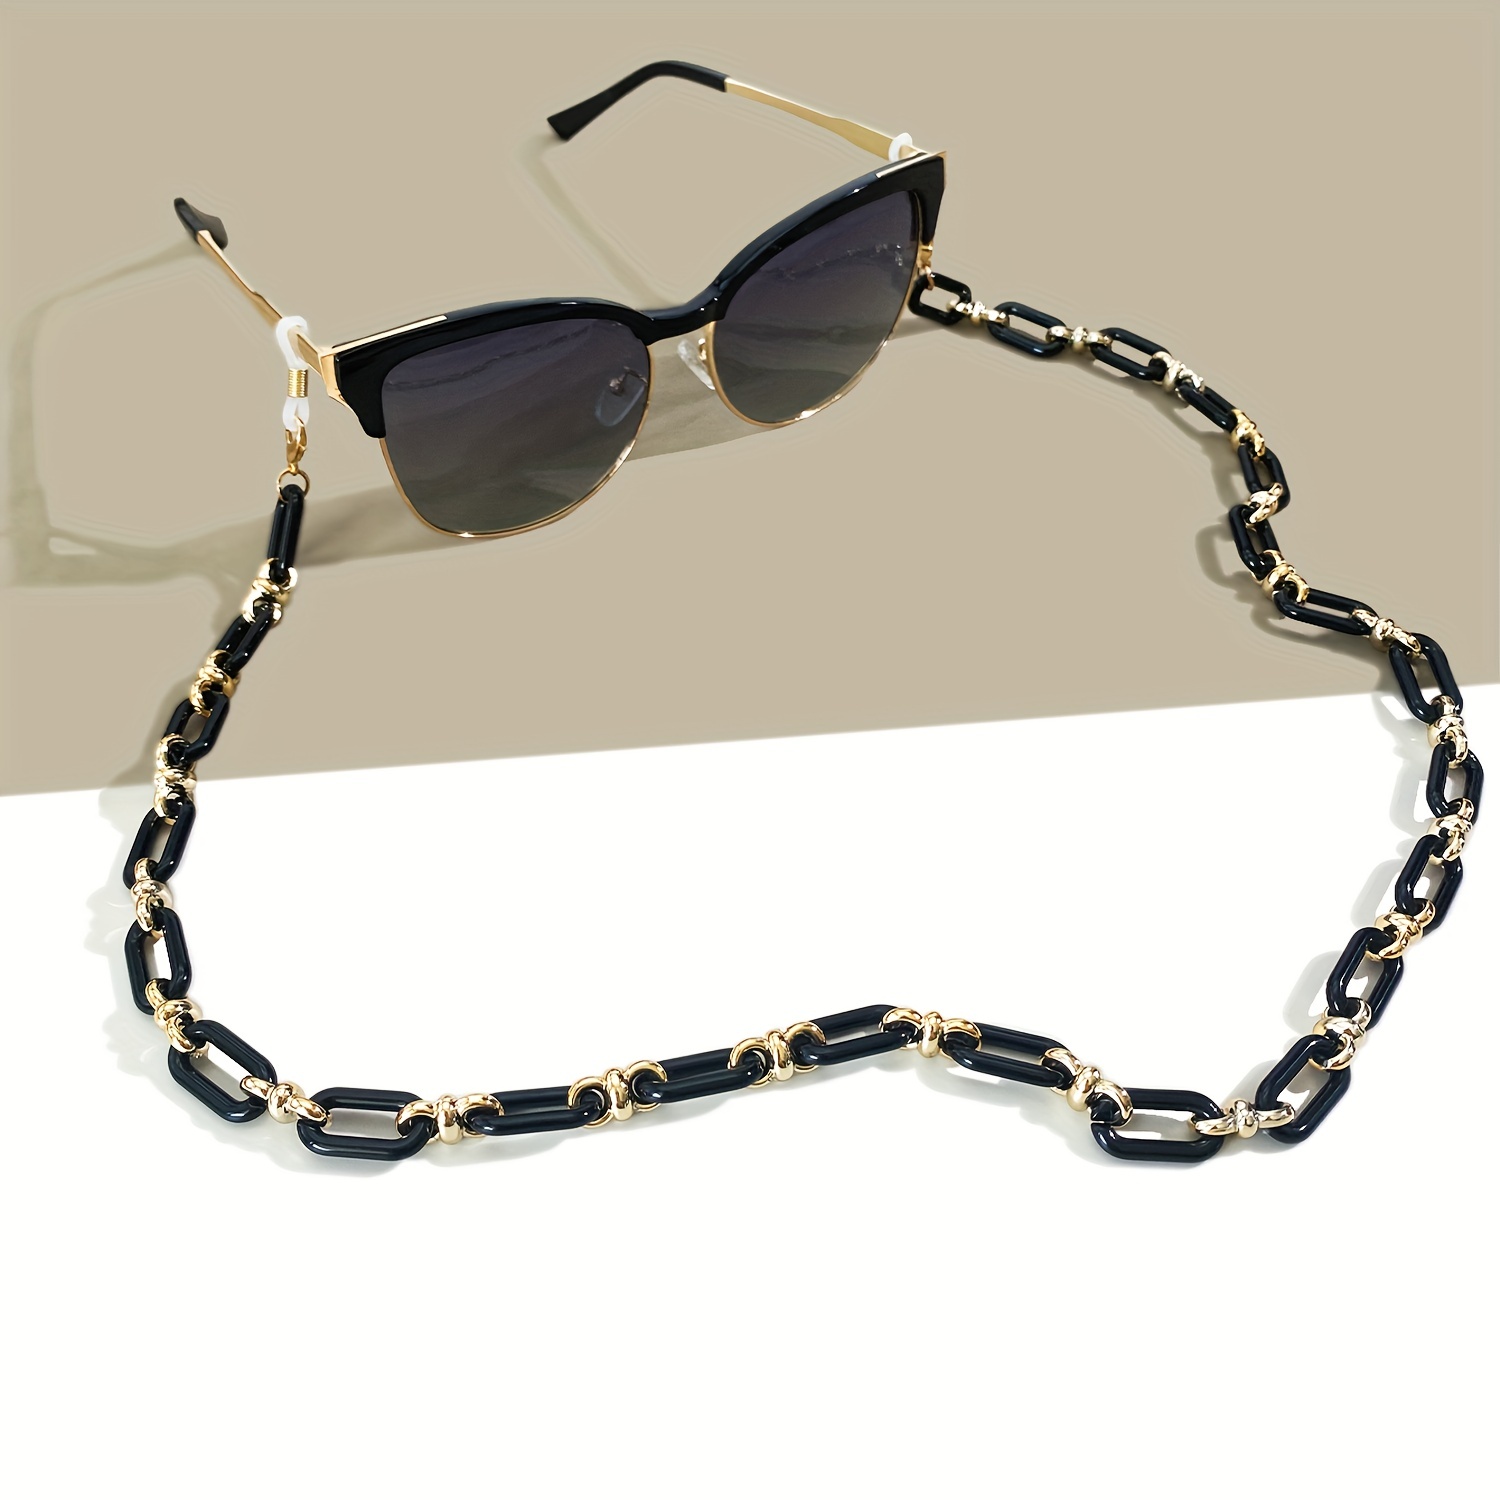 Acrylic Glasses Chain Anti Slip Sunglasses Reading Glasses Lanyard